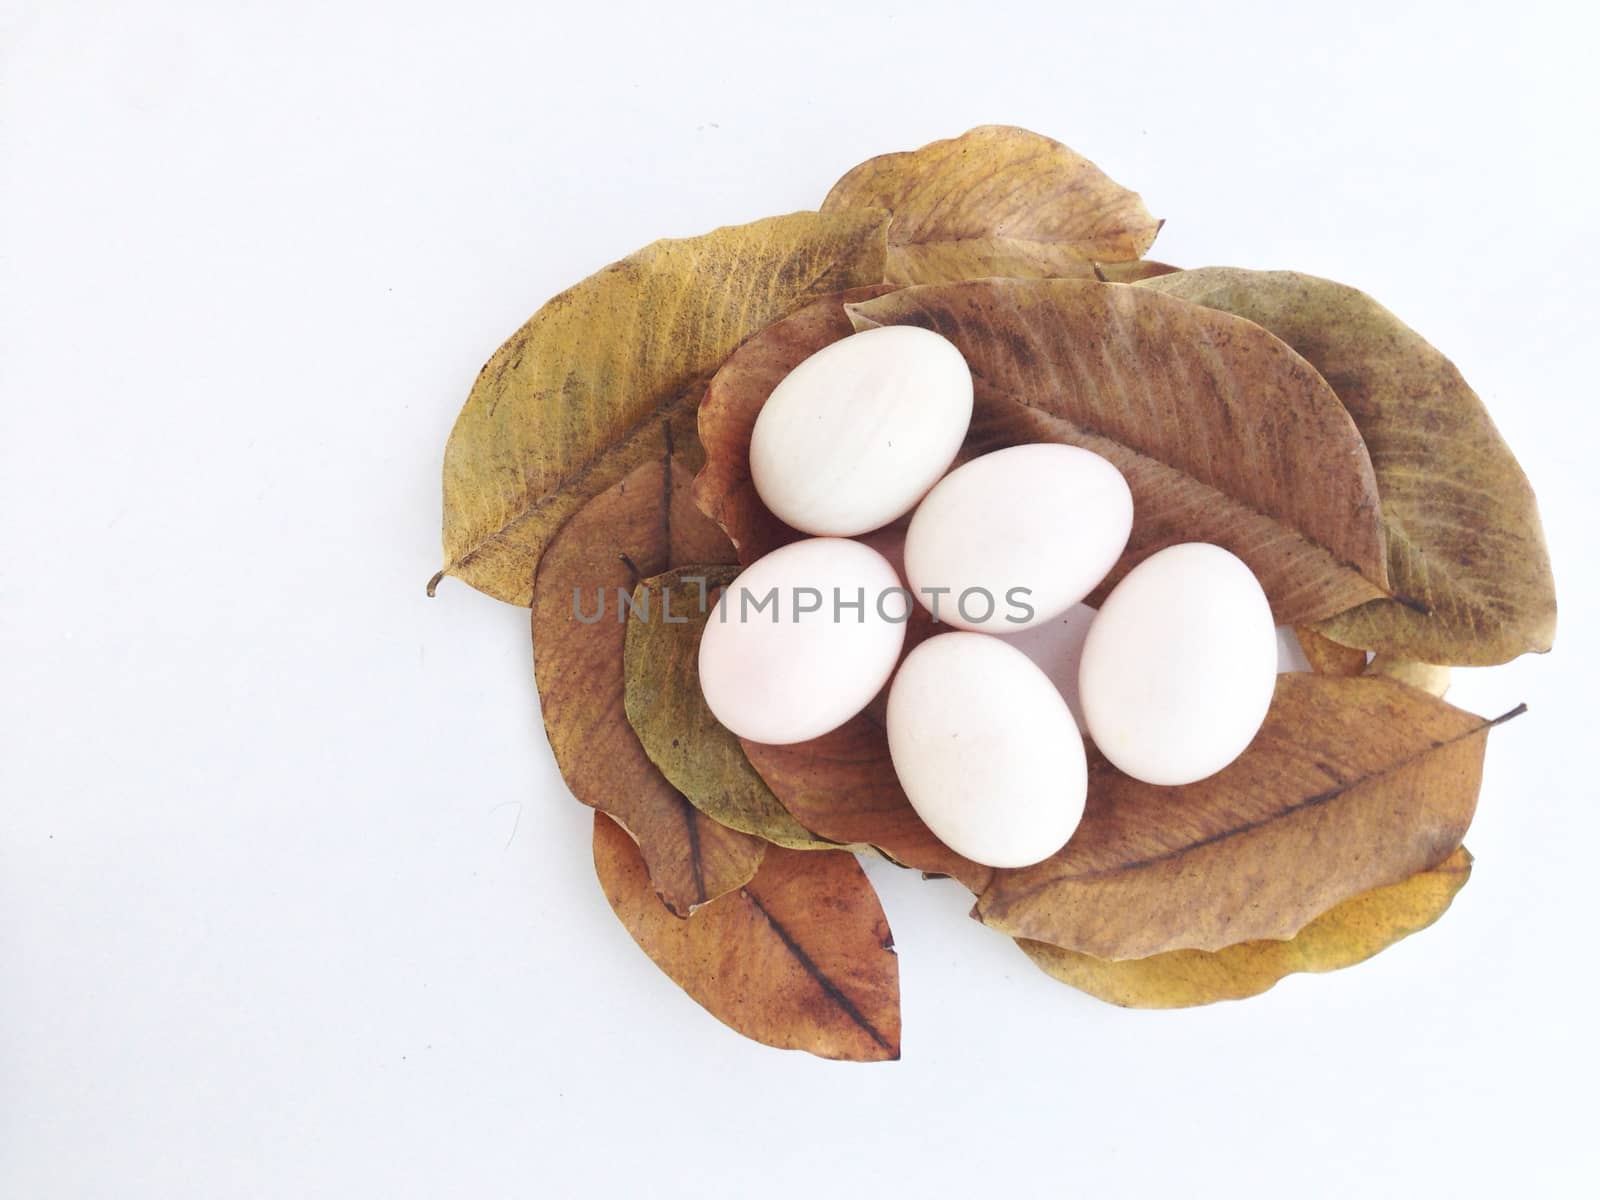 duck eggs on dry leaves by Bowonpat